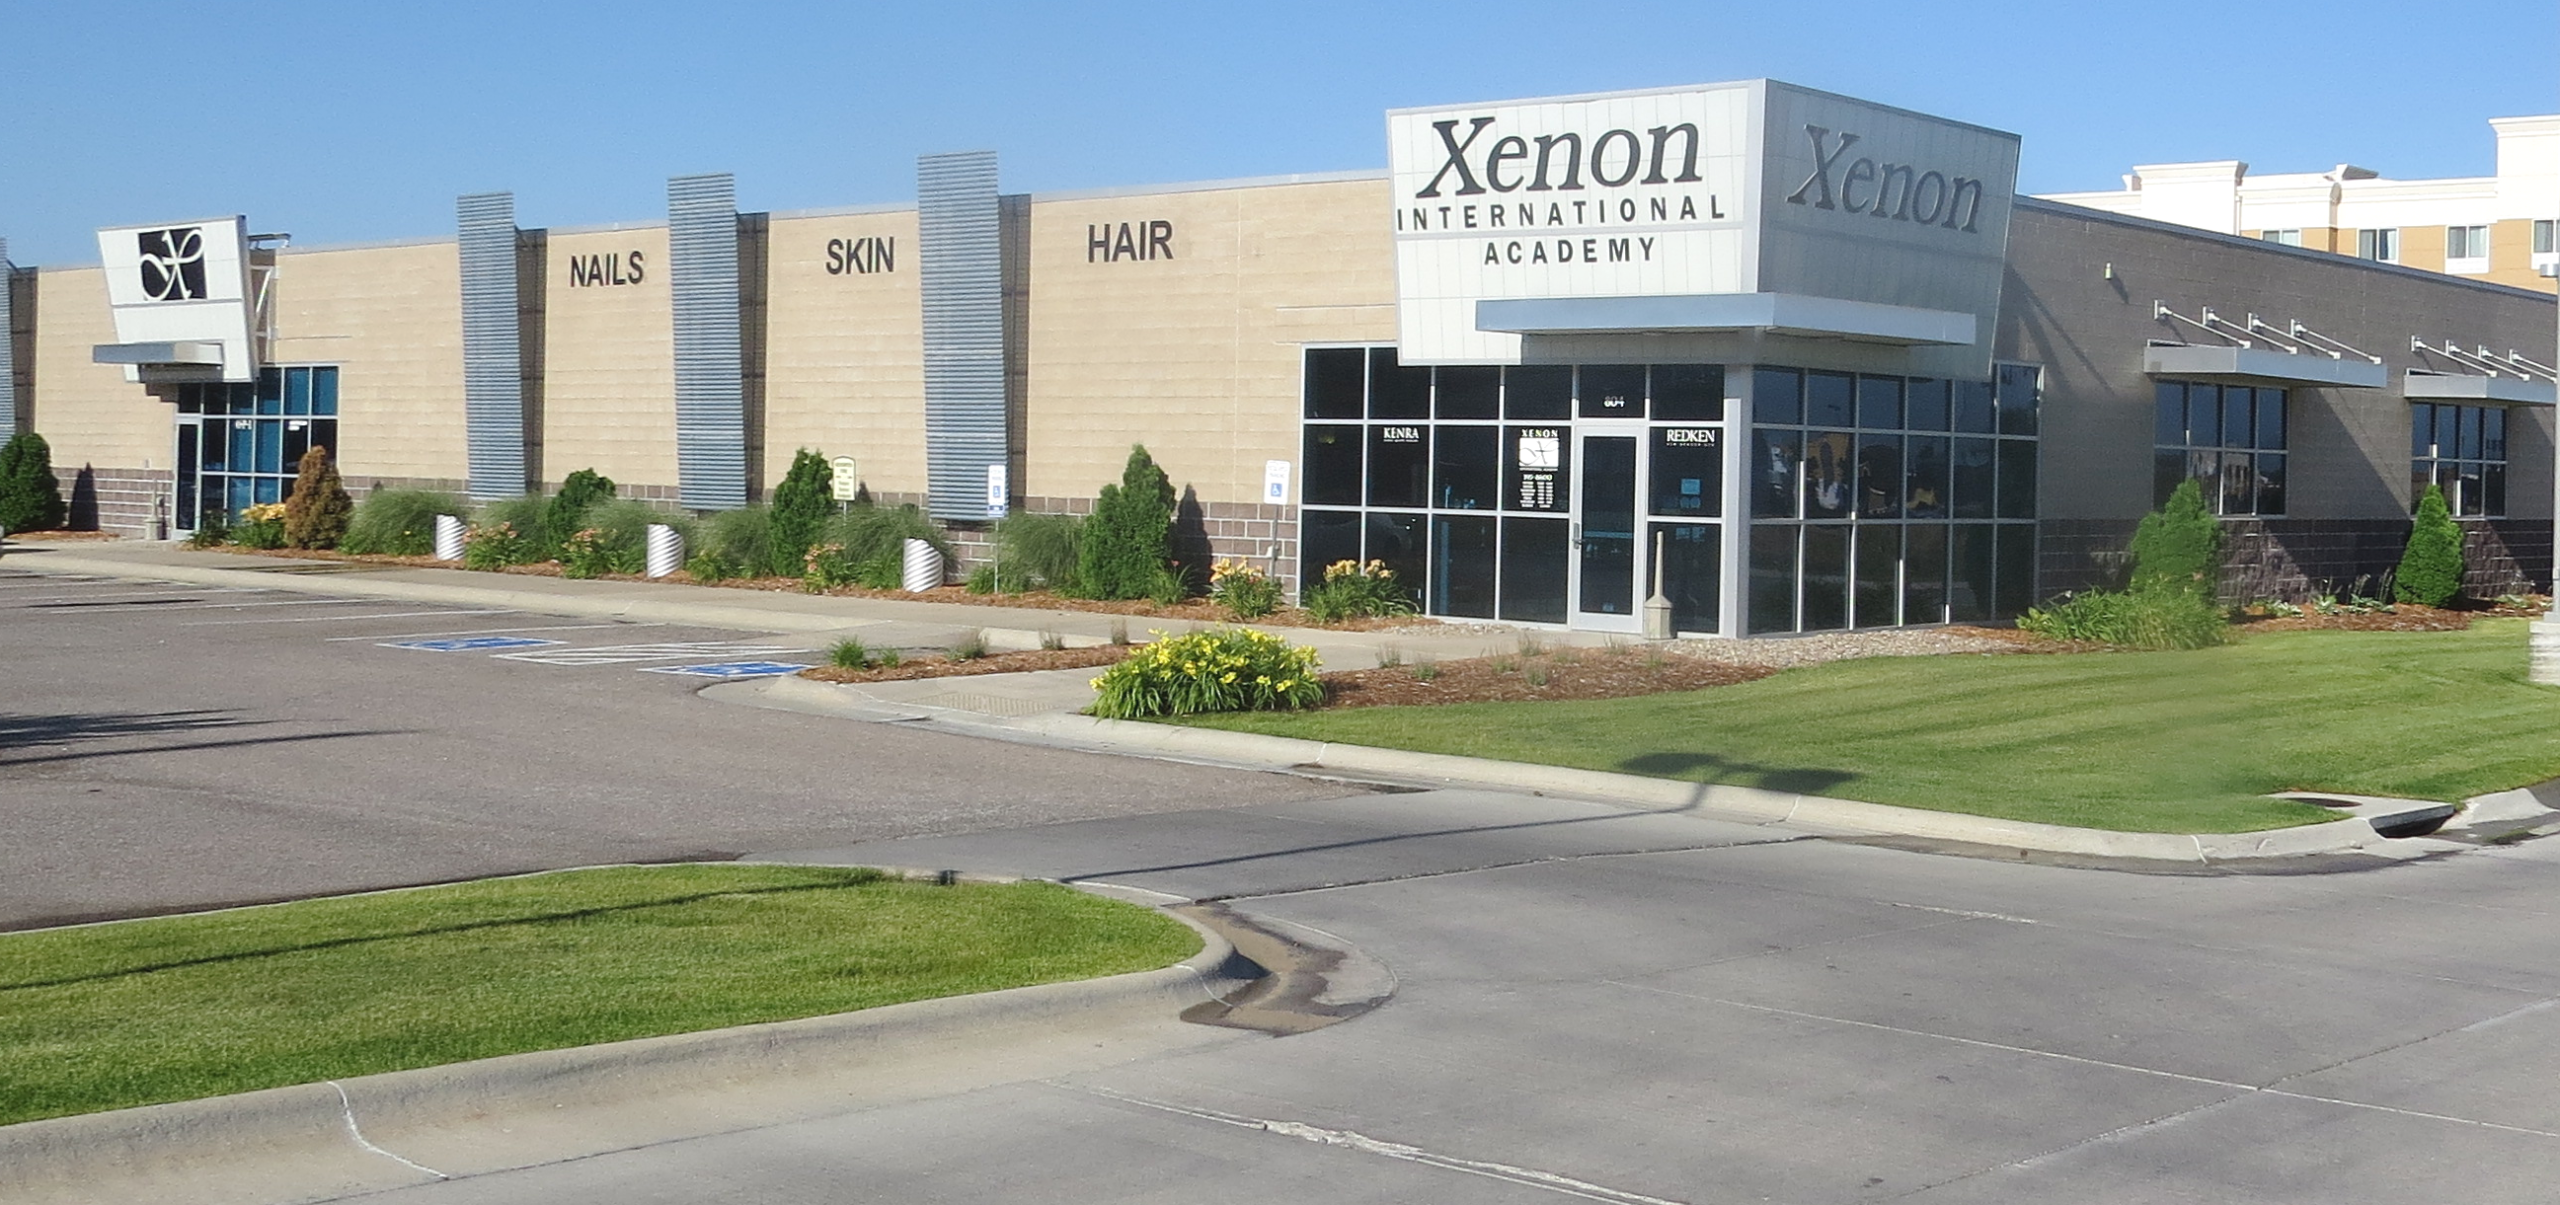 Xenon International Academy Facility